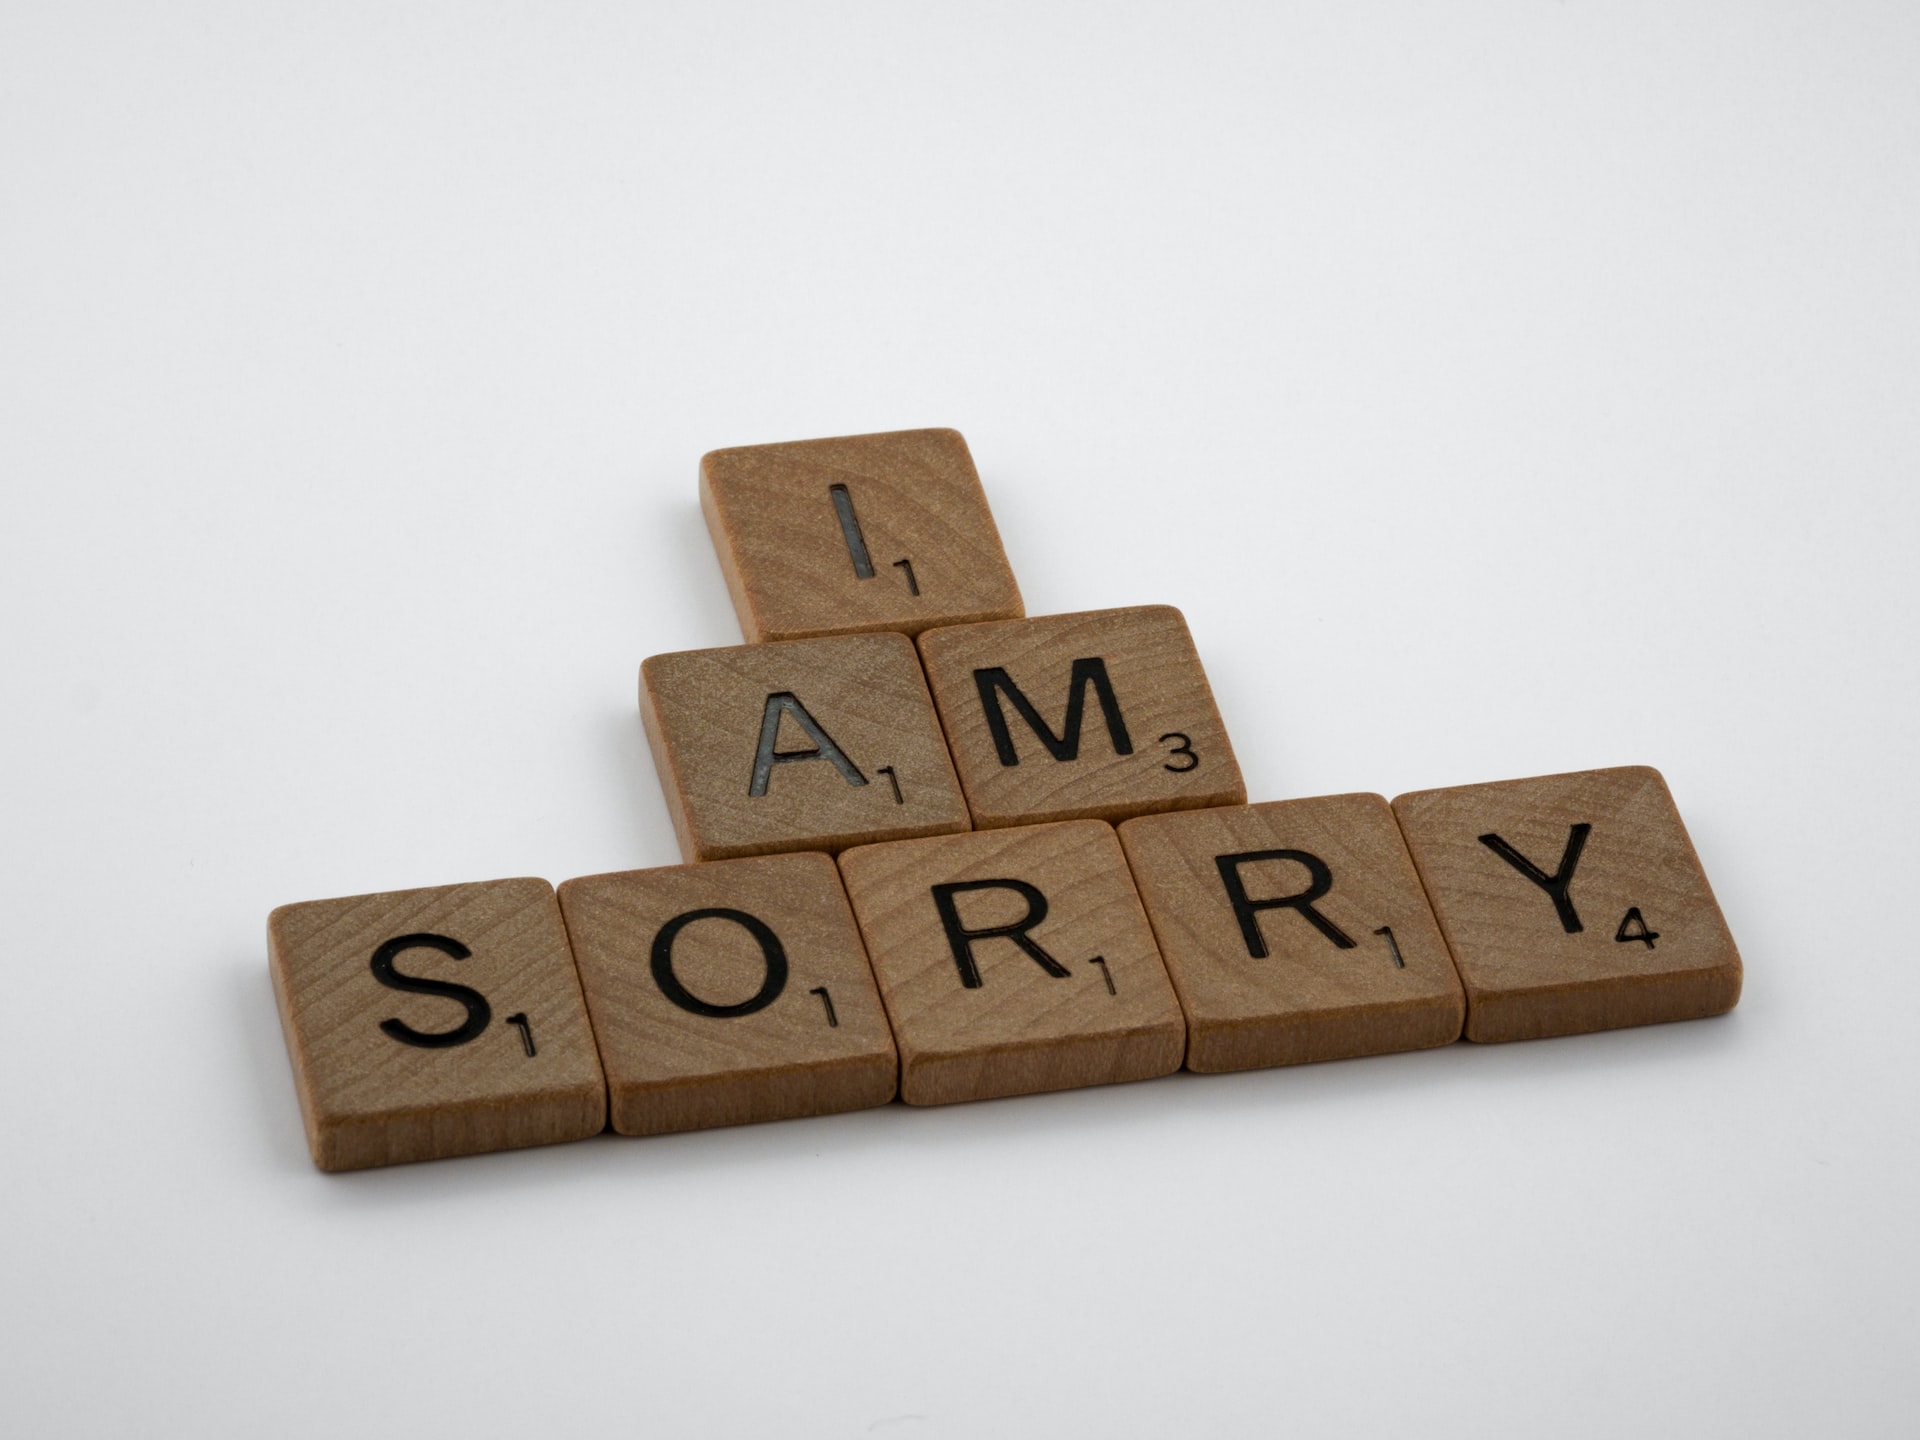 Apology I am sorry